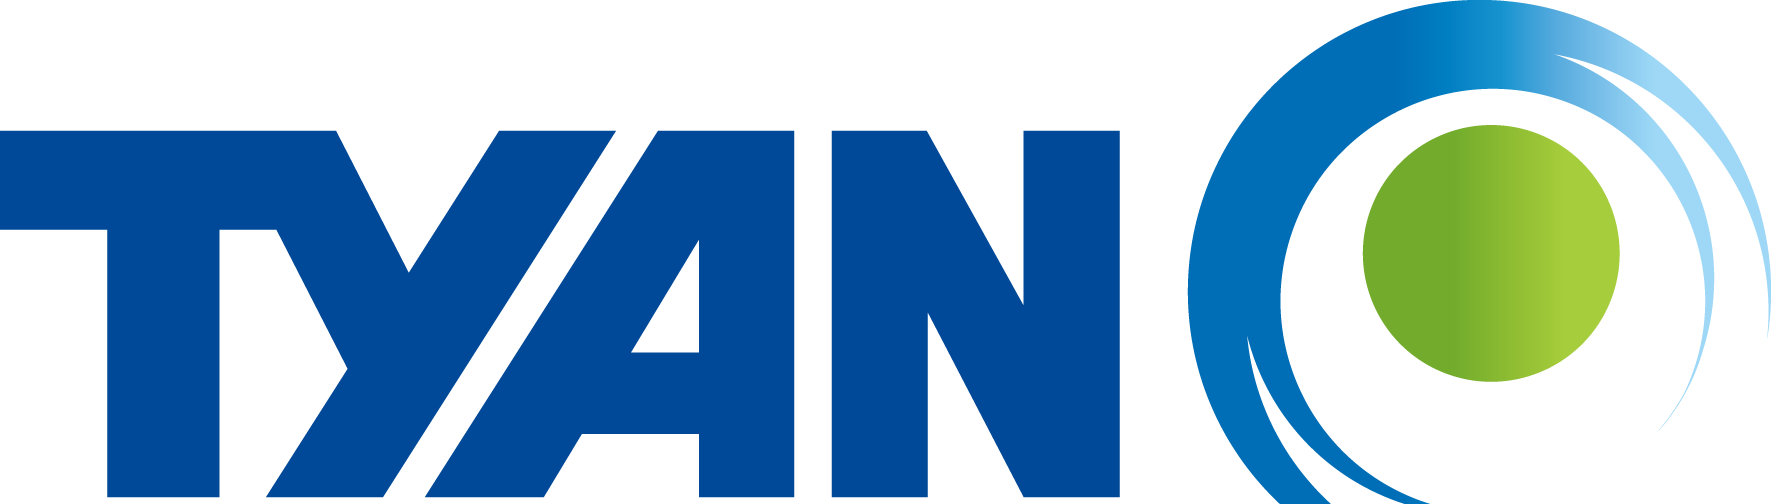 TYAN_SERVER Logo